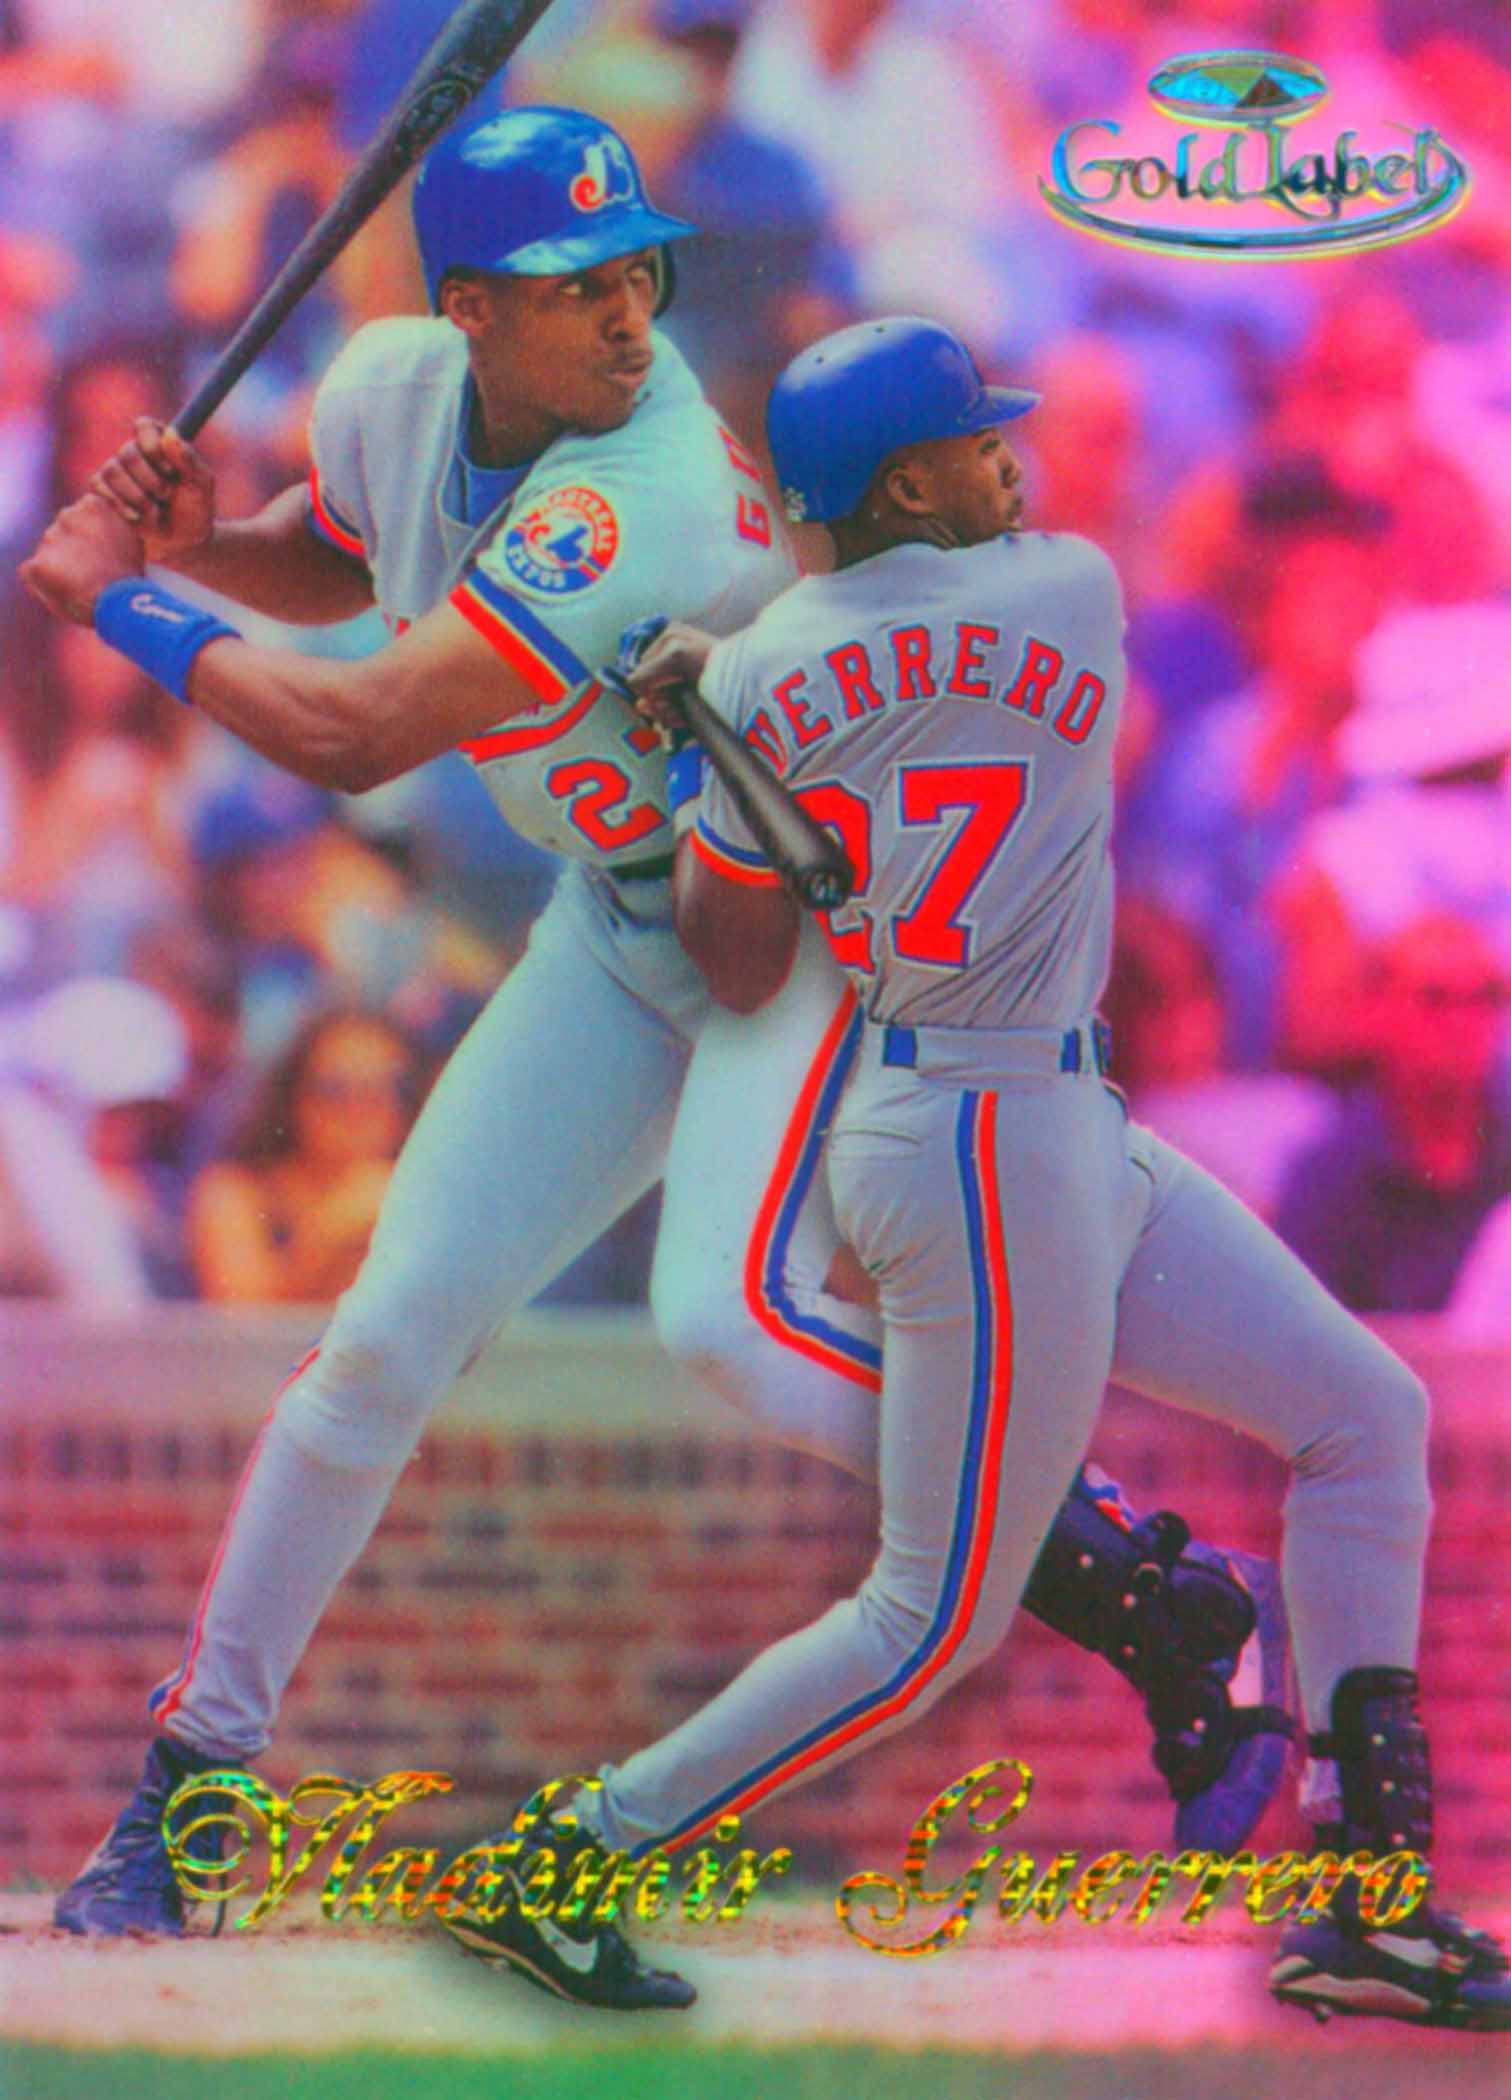  Baseball MLB 2010 Topps Update #US-270 Vladimir Guerrero Rangers  : Collectibles & Fine Art